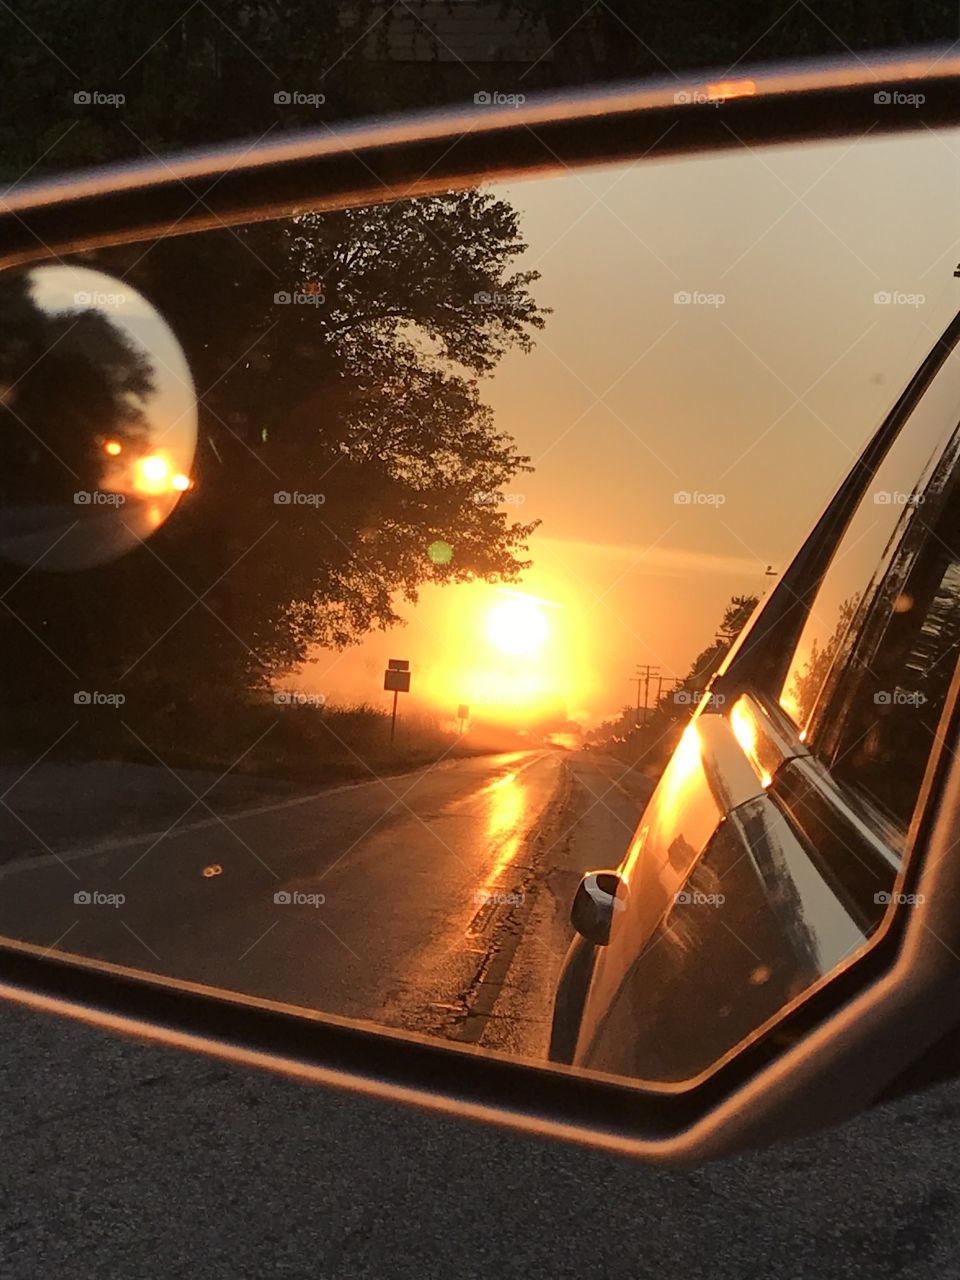 Looking through the mirror- gorgeous sunrise